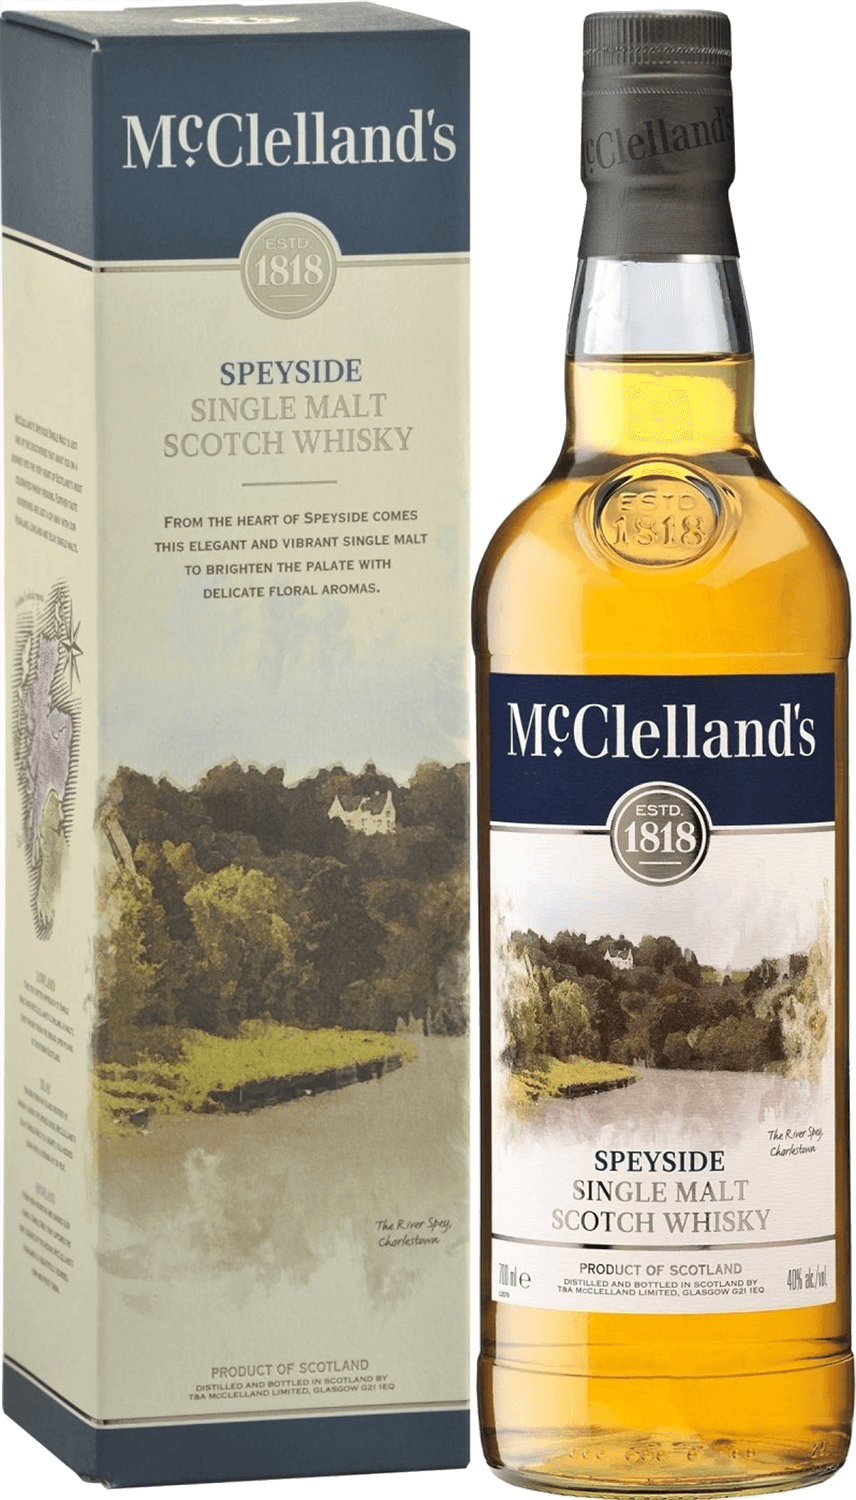 McClelland's Speyside single malt scotch whisky (gift box) glen scotia victoriana single malt scotch whisky gift box